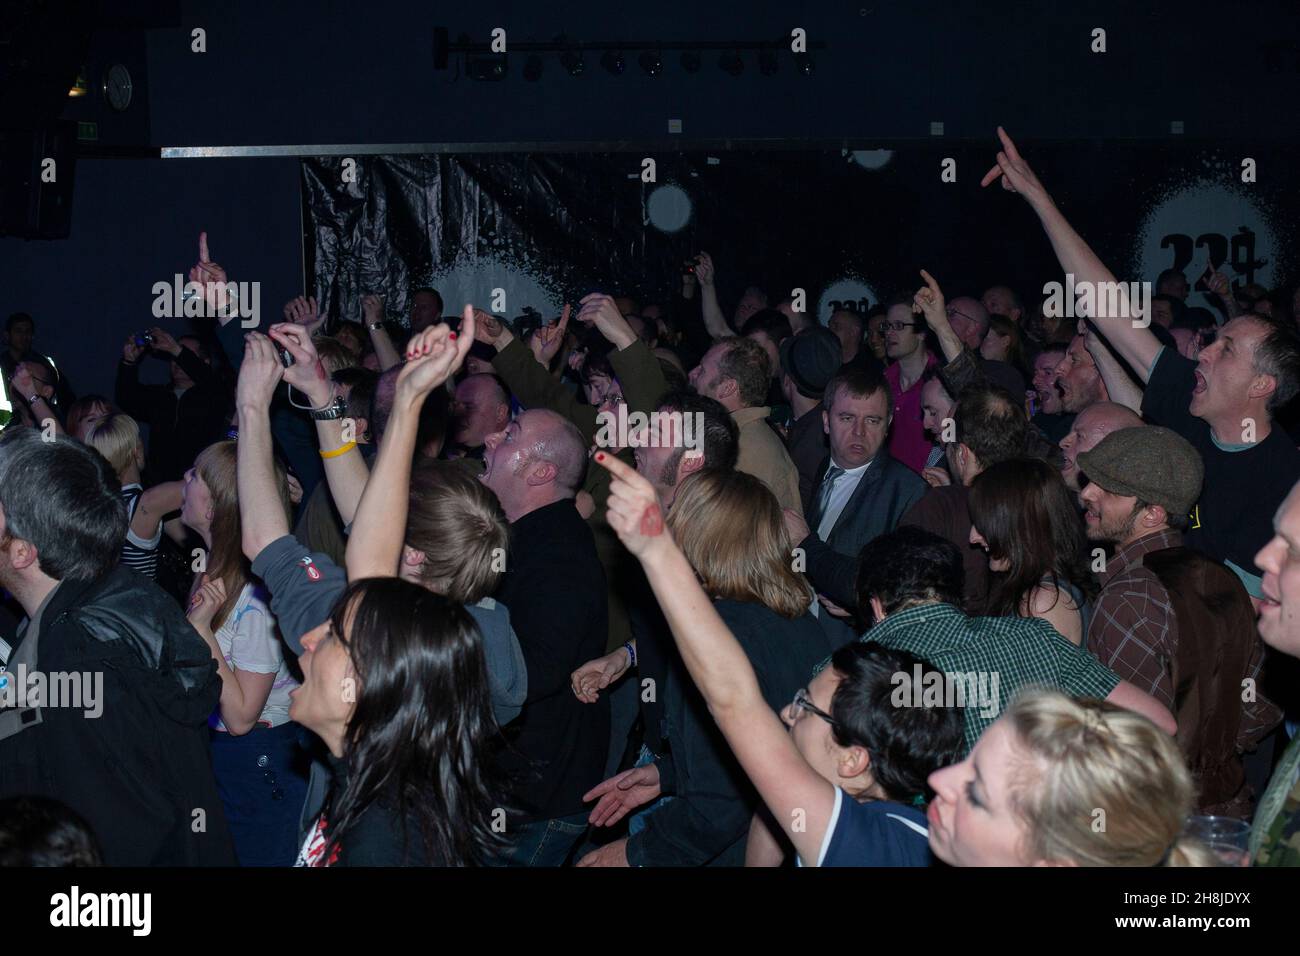 Music concert crowd, people enjoying live rock performance Stock Photo